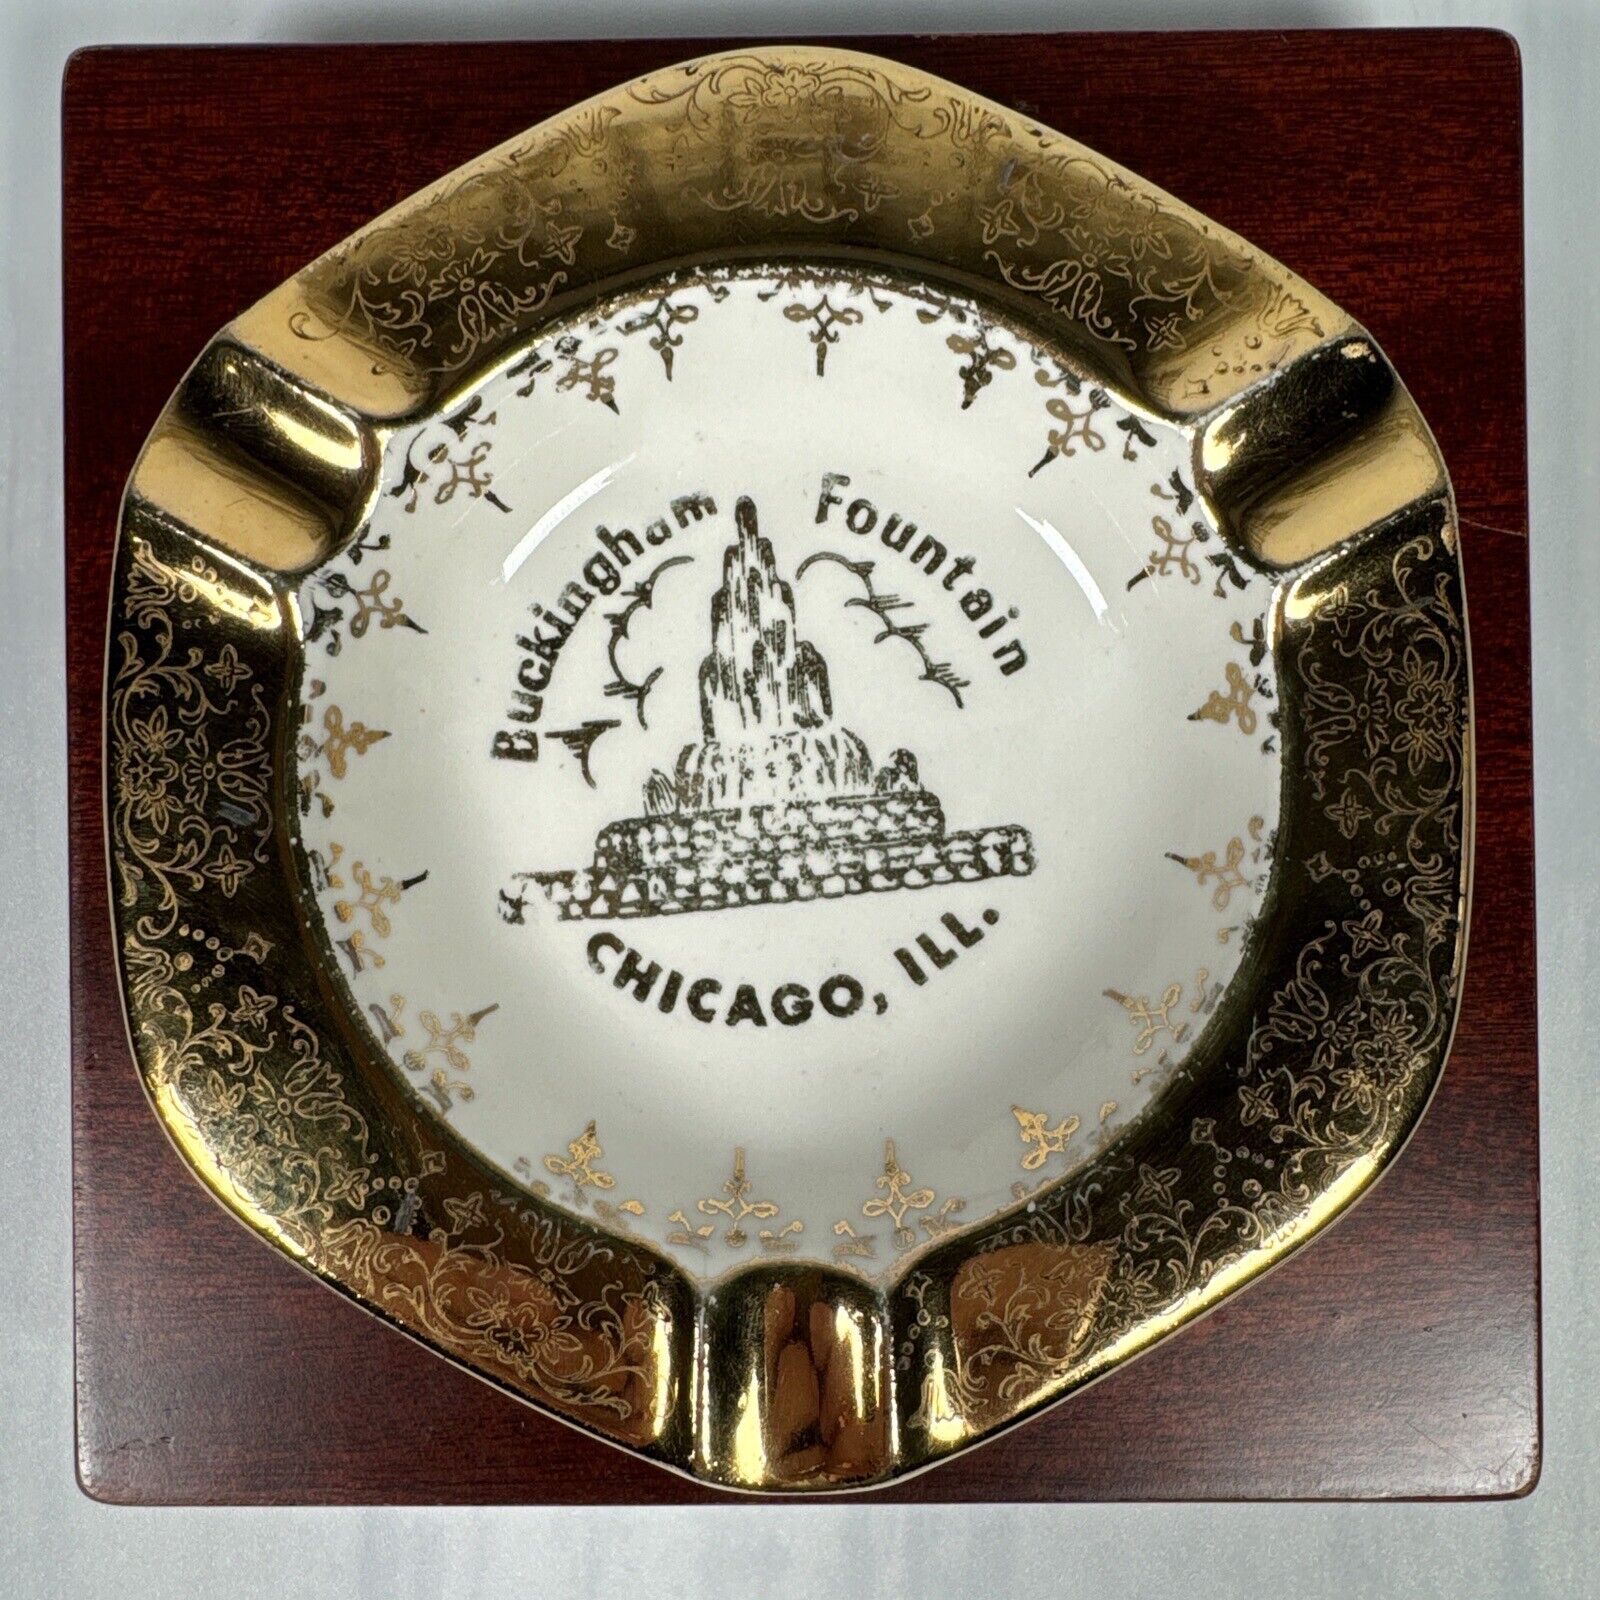 Vintage Ceramic Ashtray Buckingham Fountain Chicago ILL. 22K  Gold Plated